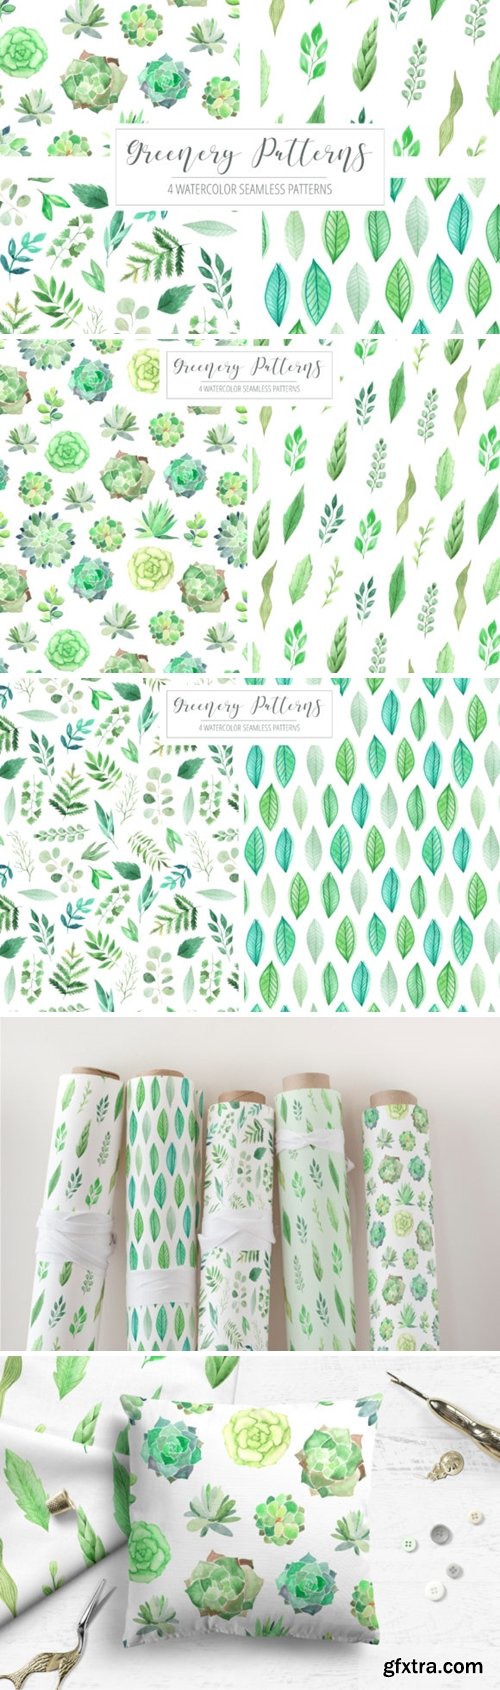 4 Watercolor Greenery Patterns 3515027